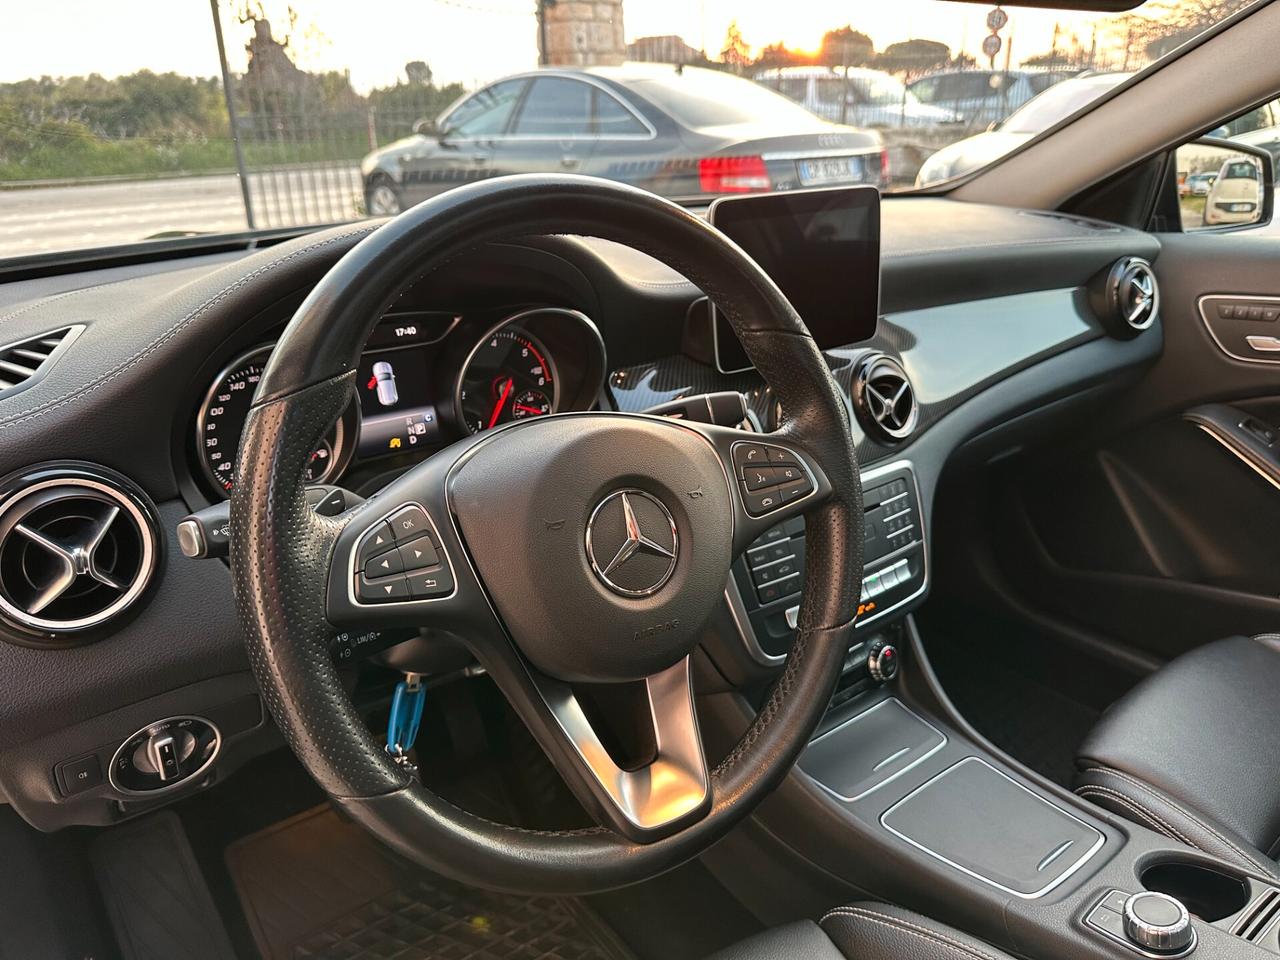 Mercedes-benz GLA 200d Night Edition 2019 Tetto